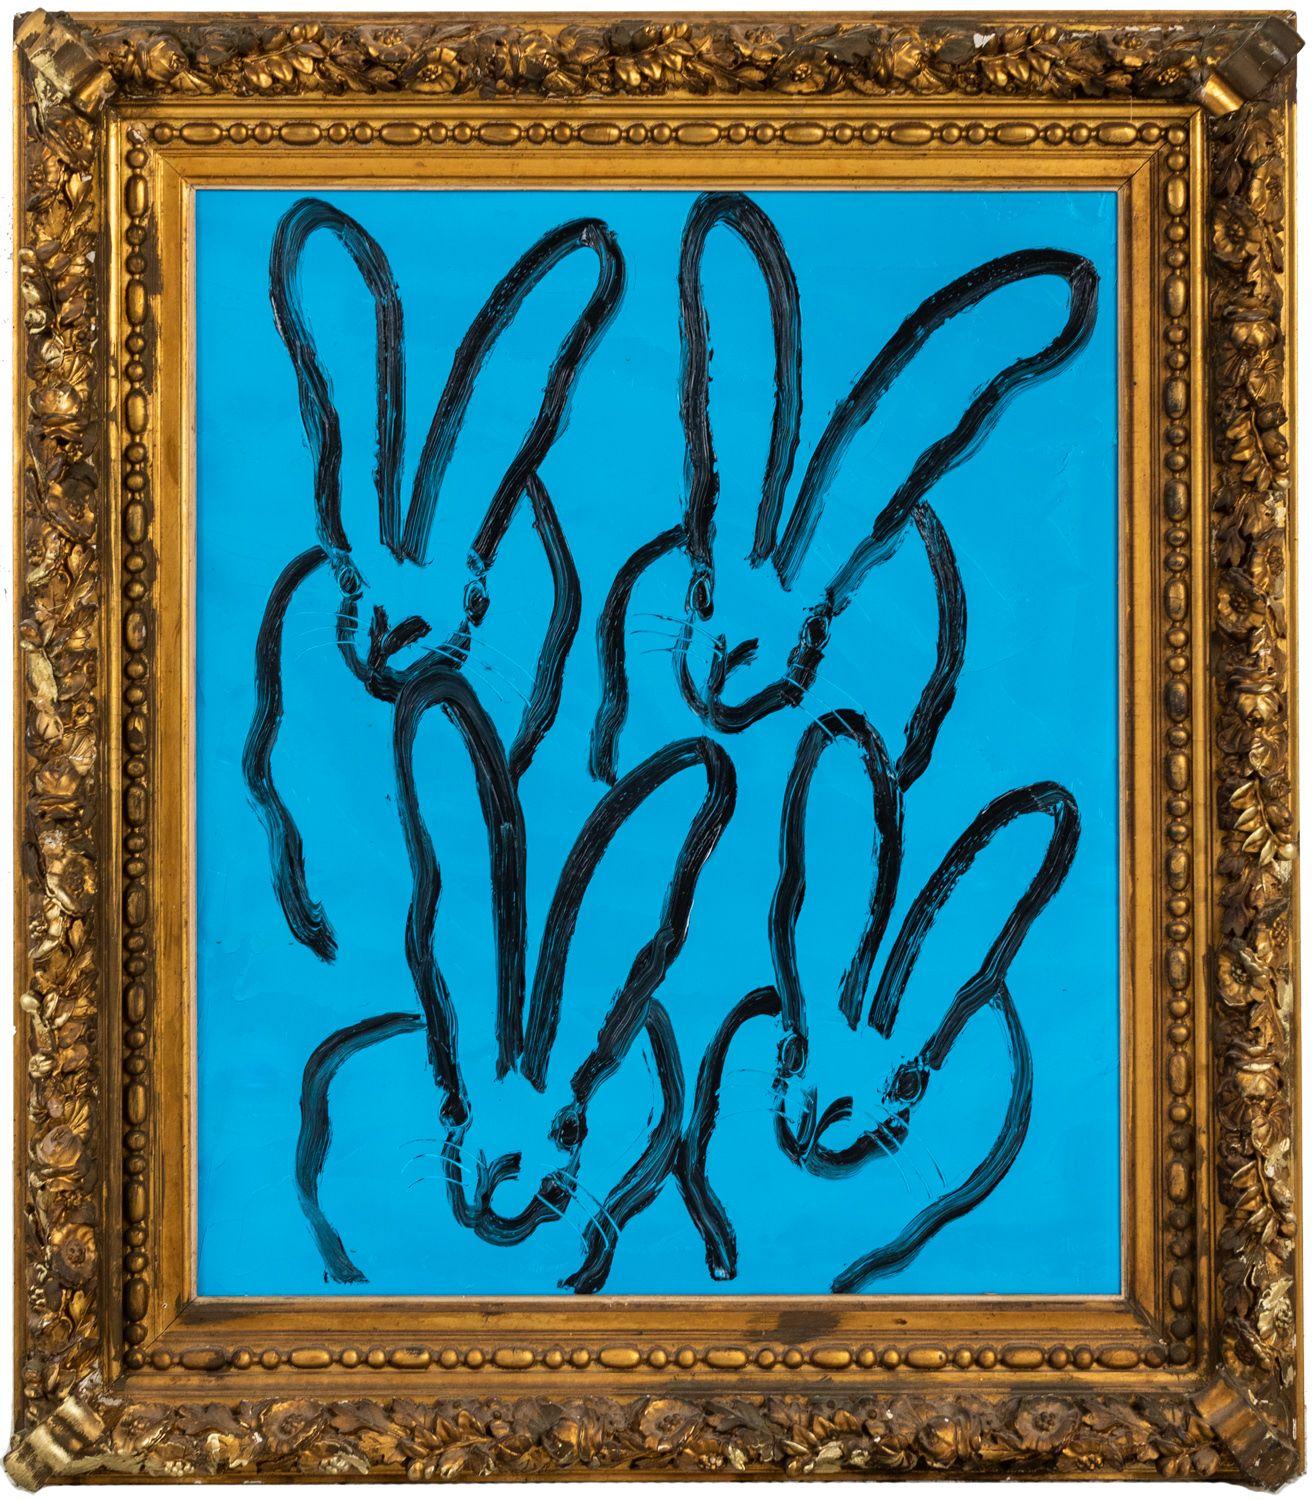 Hunt Slonem Animal Painting - 4 in Blue "Bunny Painting" Original Oil Painting in Ornate Gold Vintage Frame